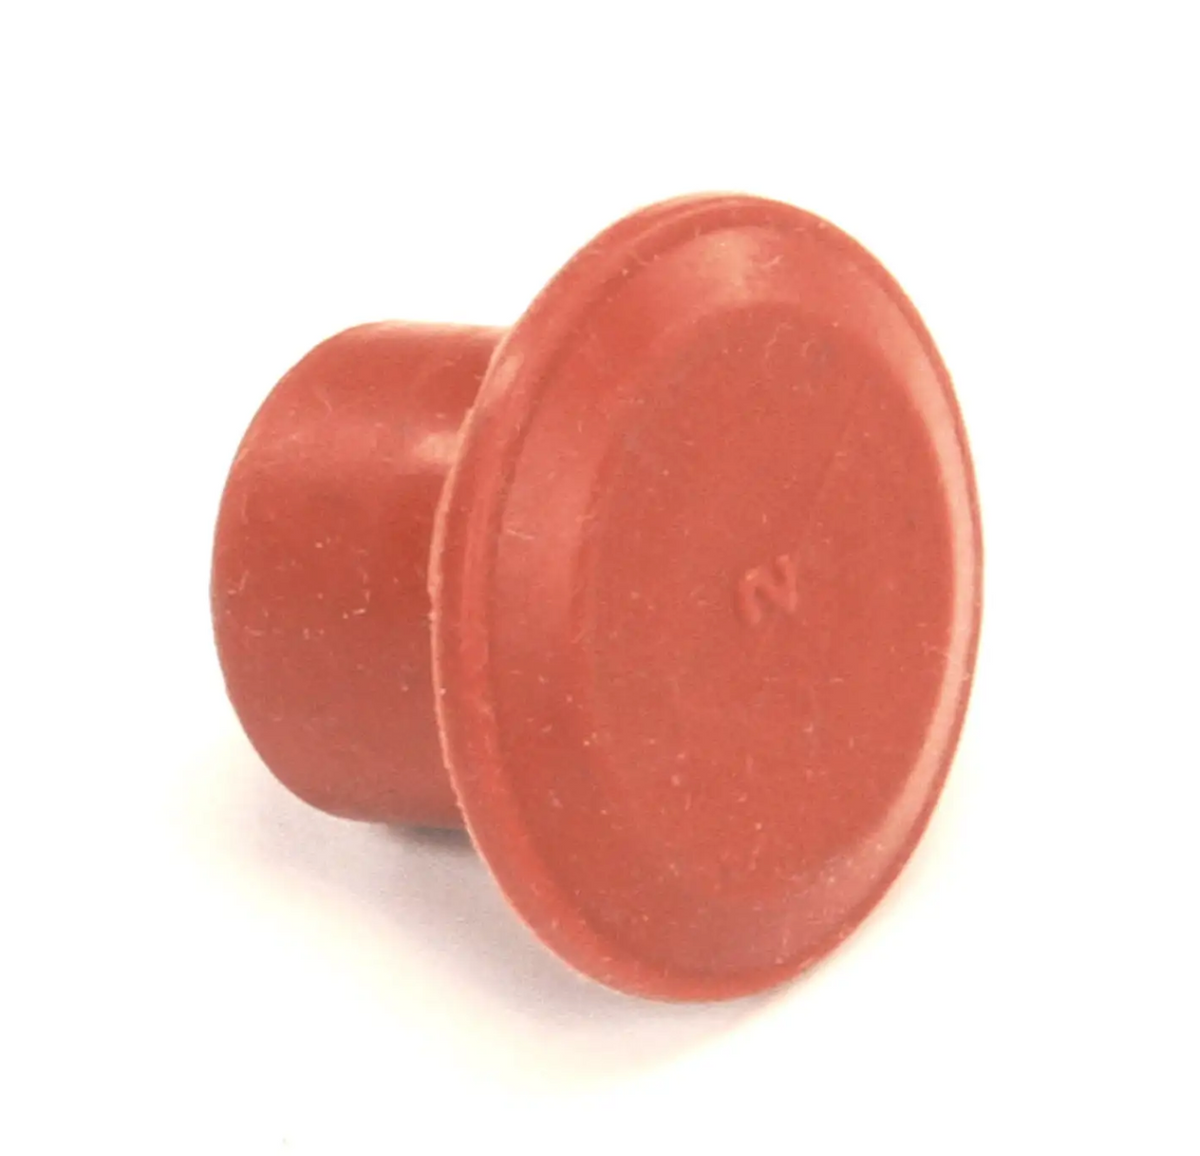 GBG-Sencotel Facuet Plunger Bottom Plug, 3 Pieces